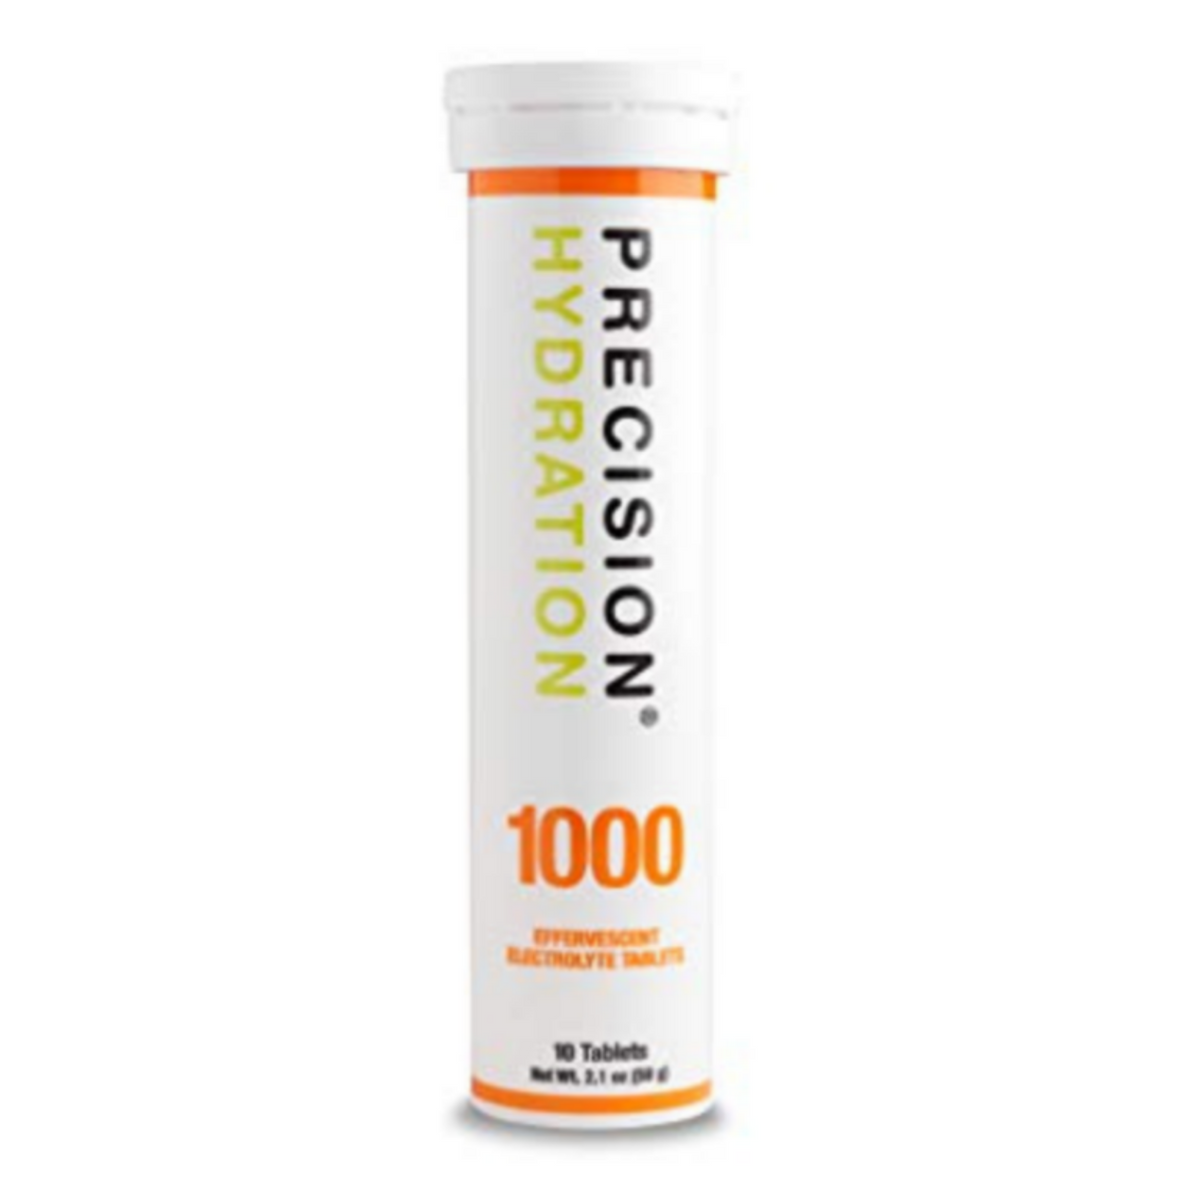 Precision Hydration PH 1000 Electrolyte hydration tablets